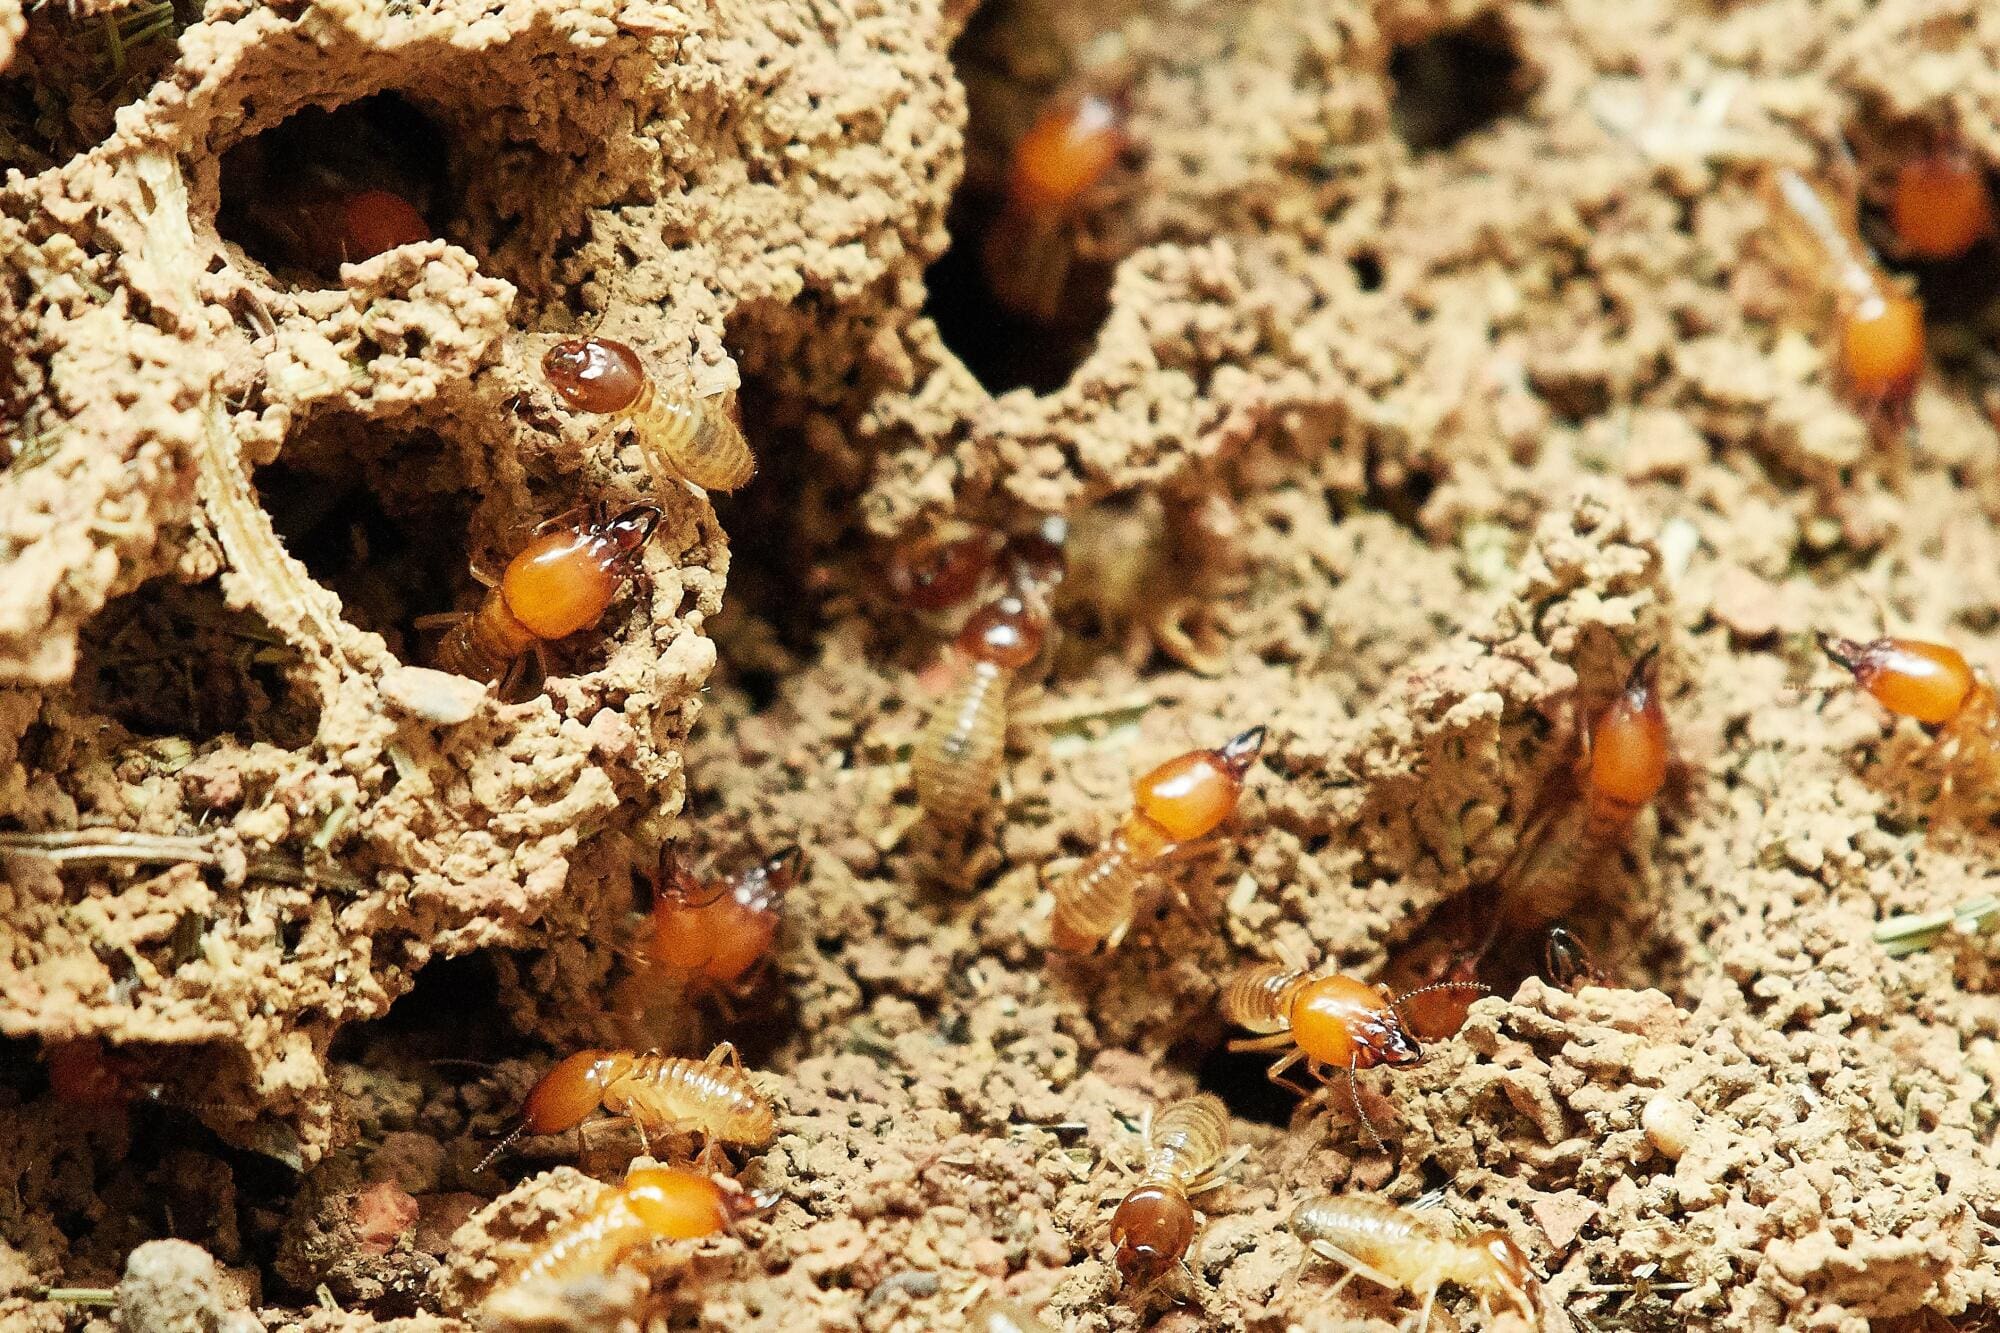 subterranean termites vs drywood termites